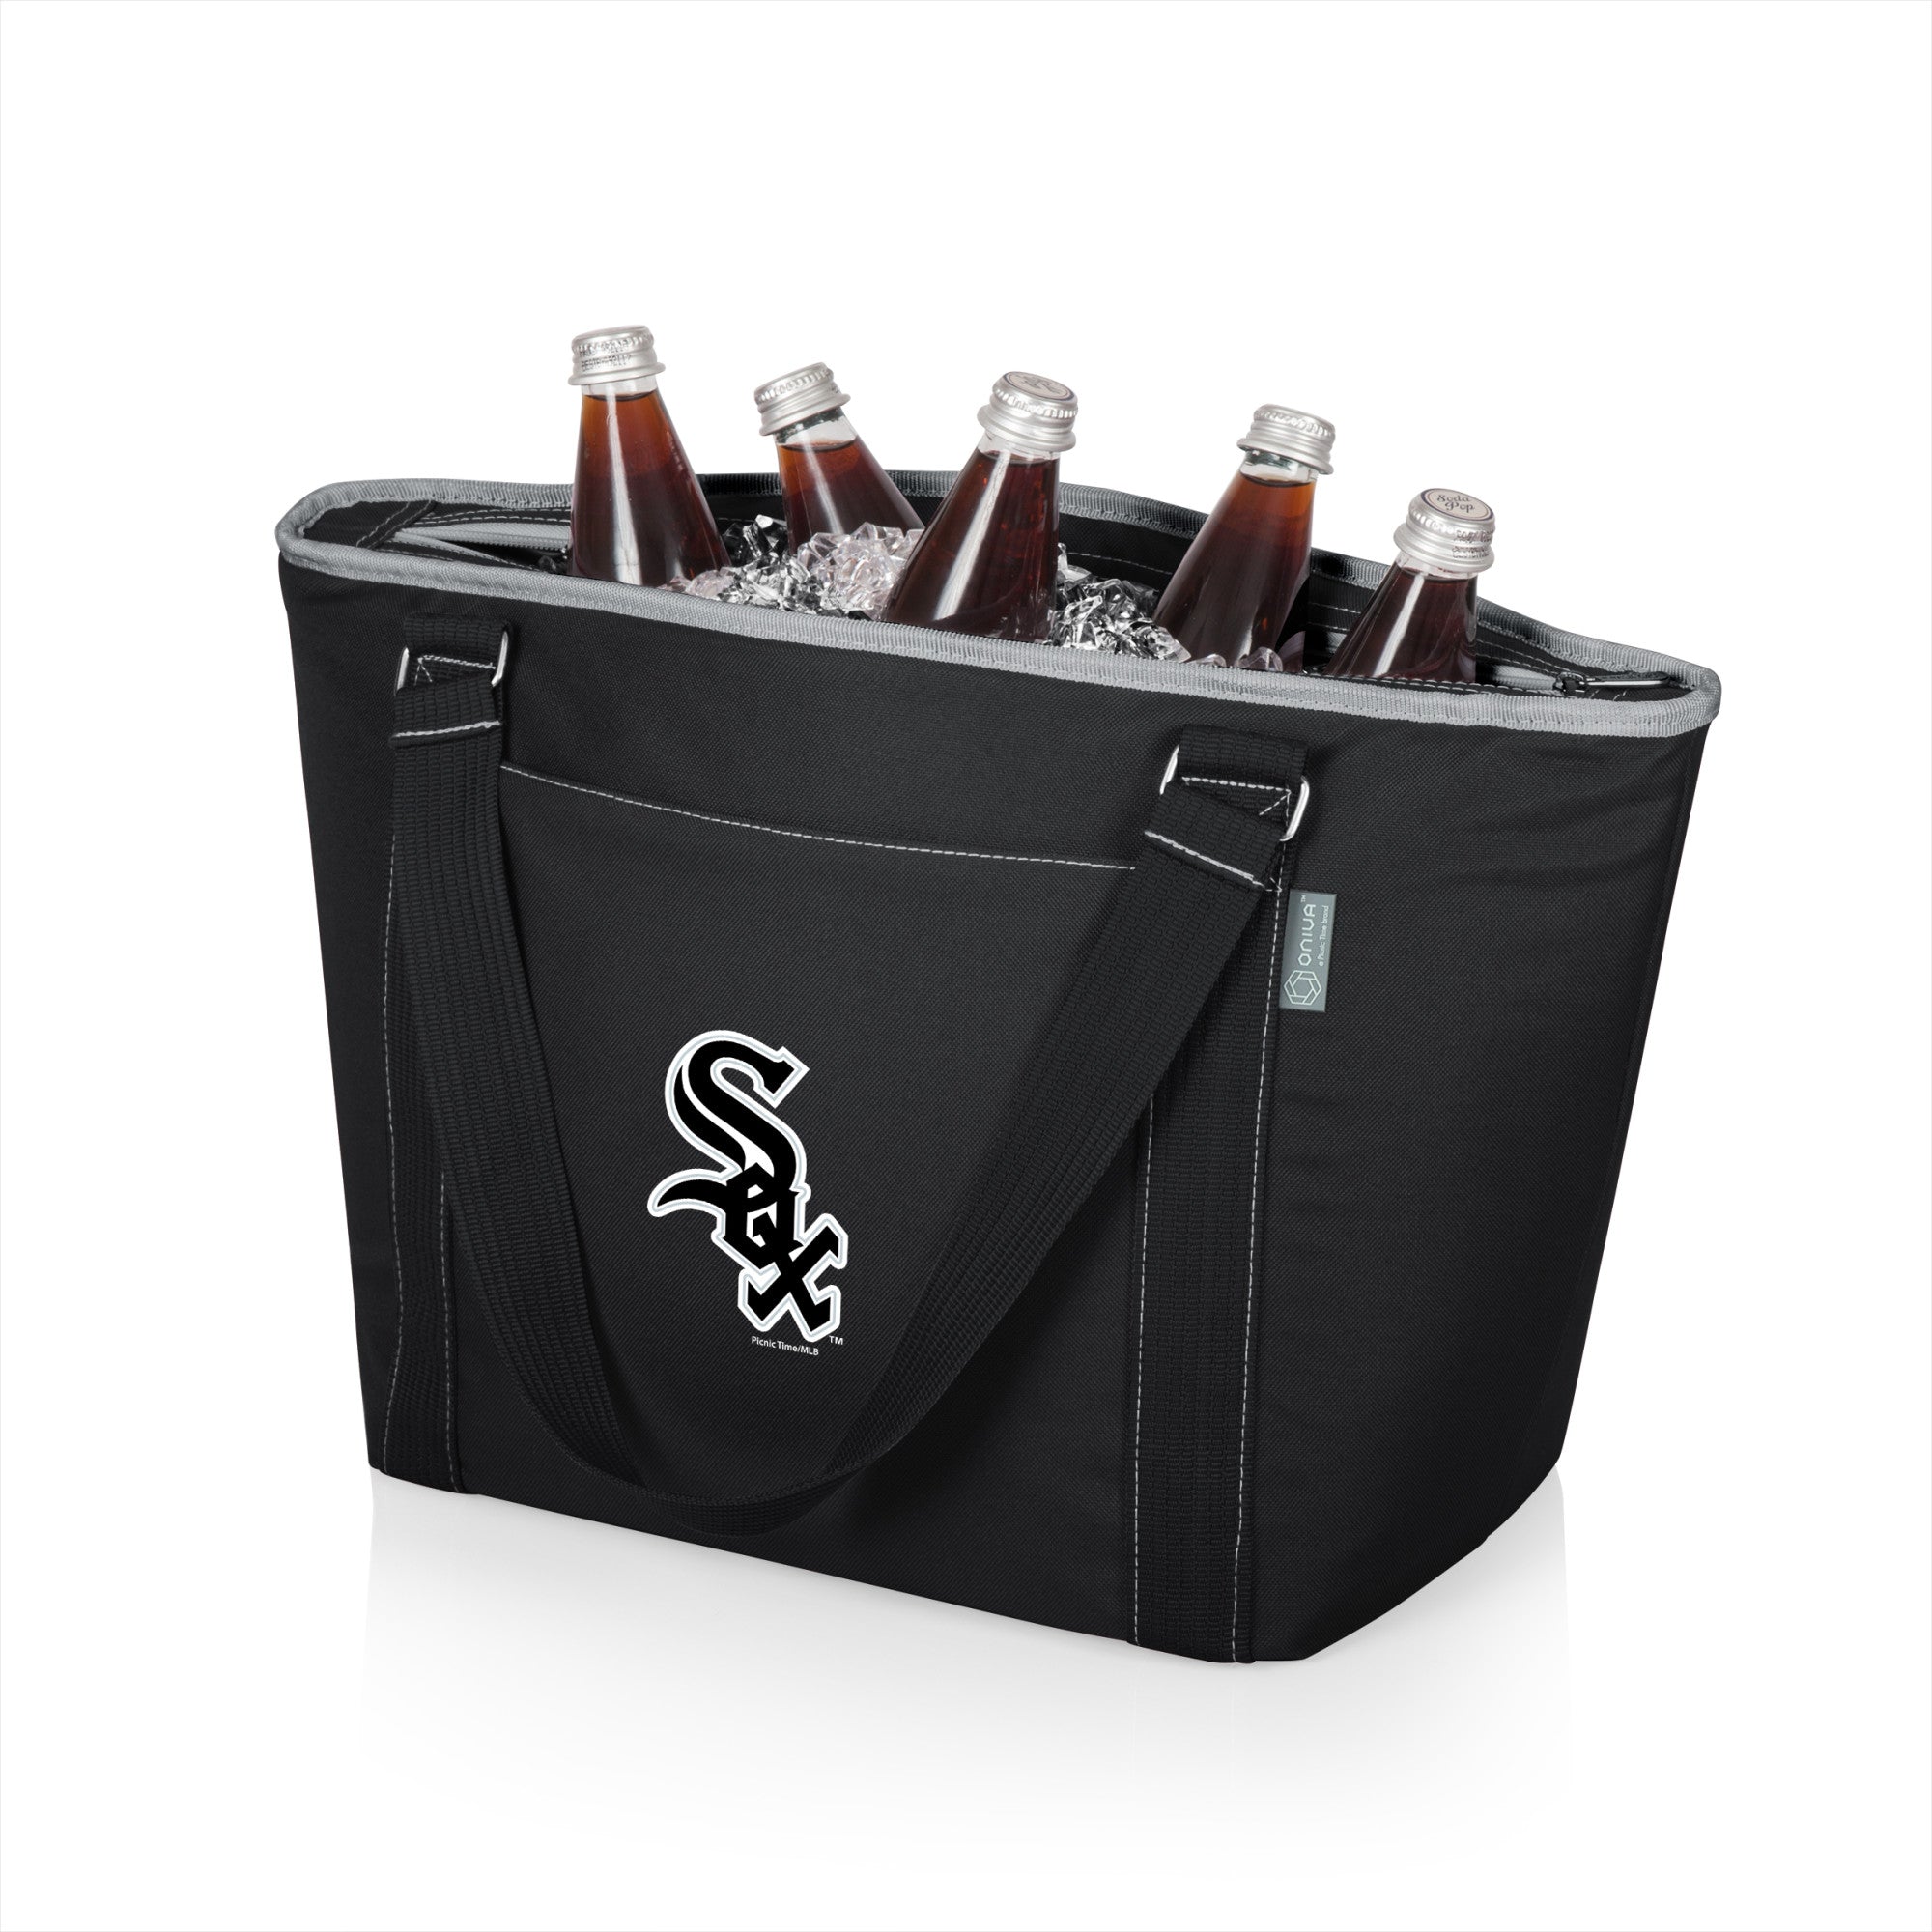 Chicago White Sox - Topanga Cooler Tote Bag